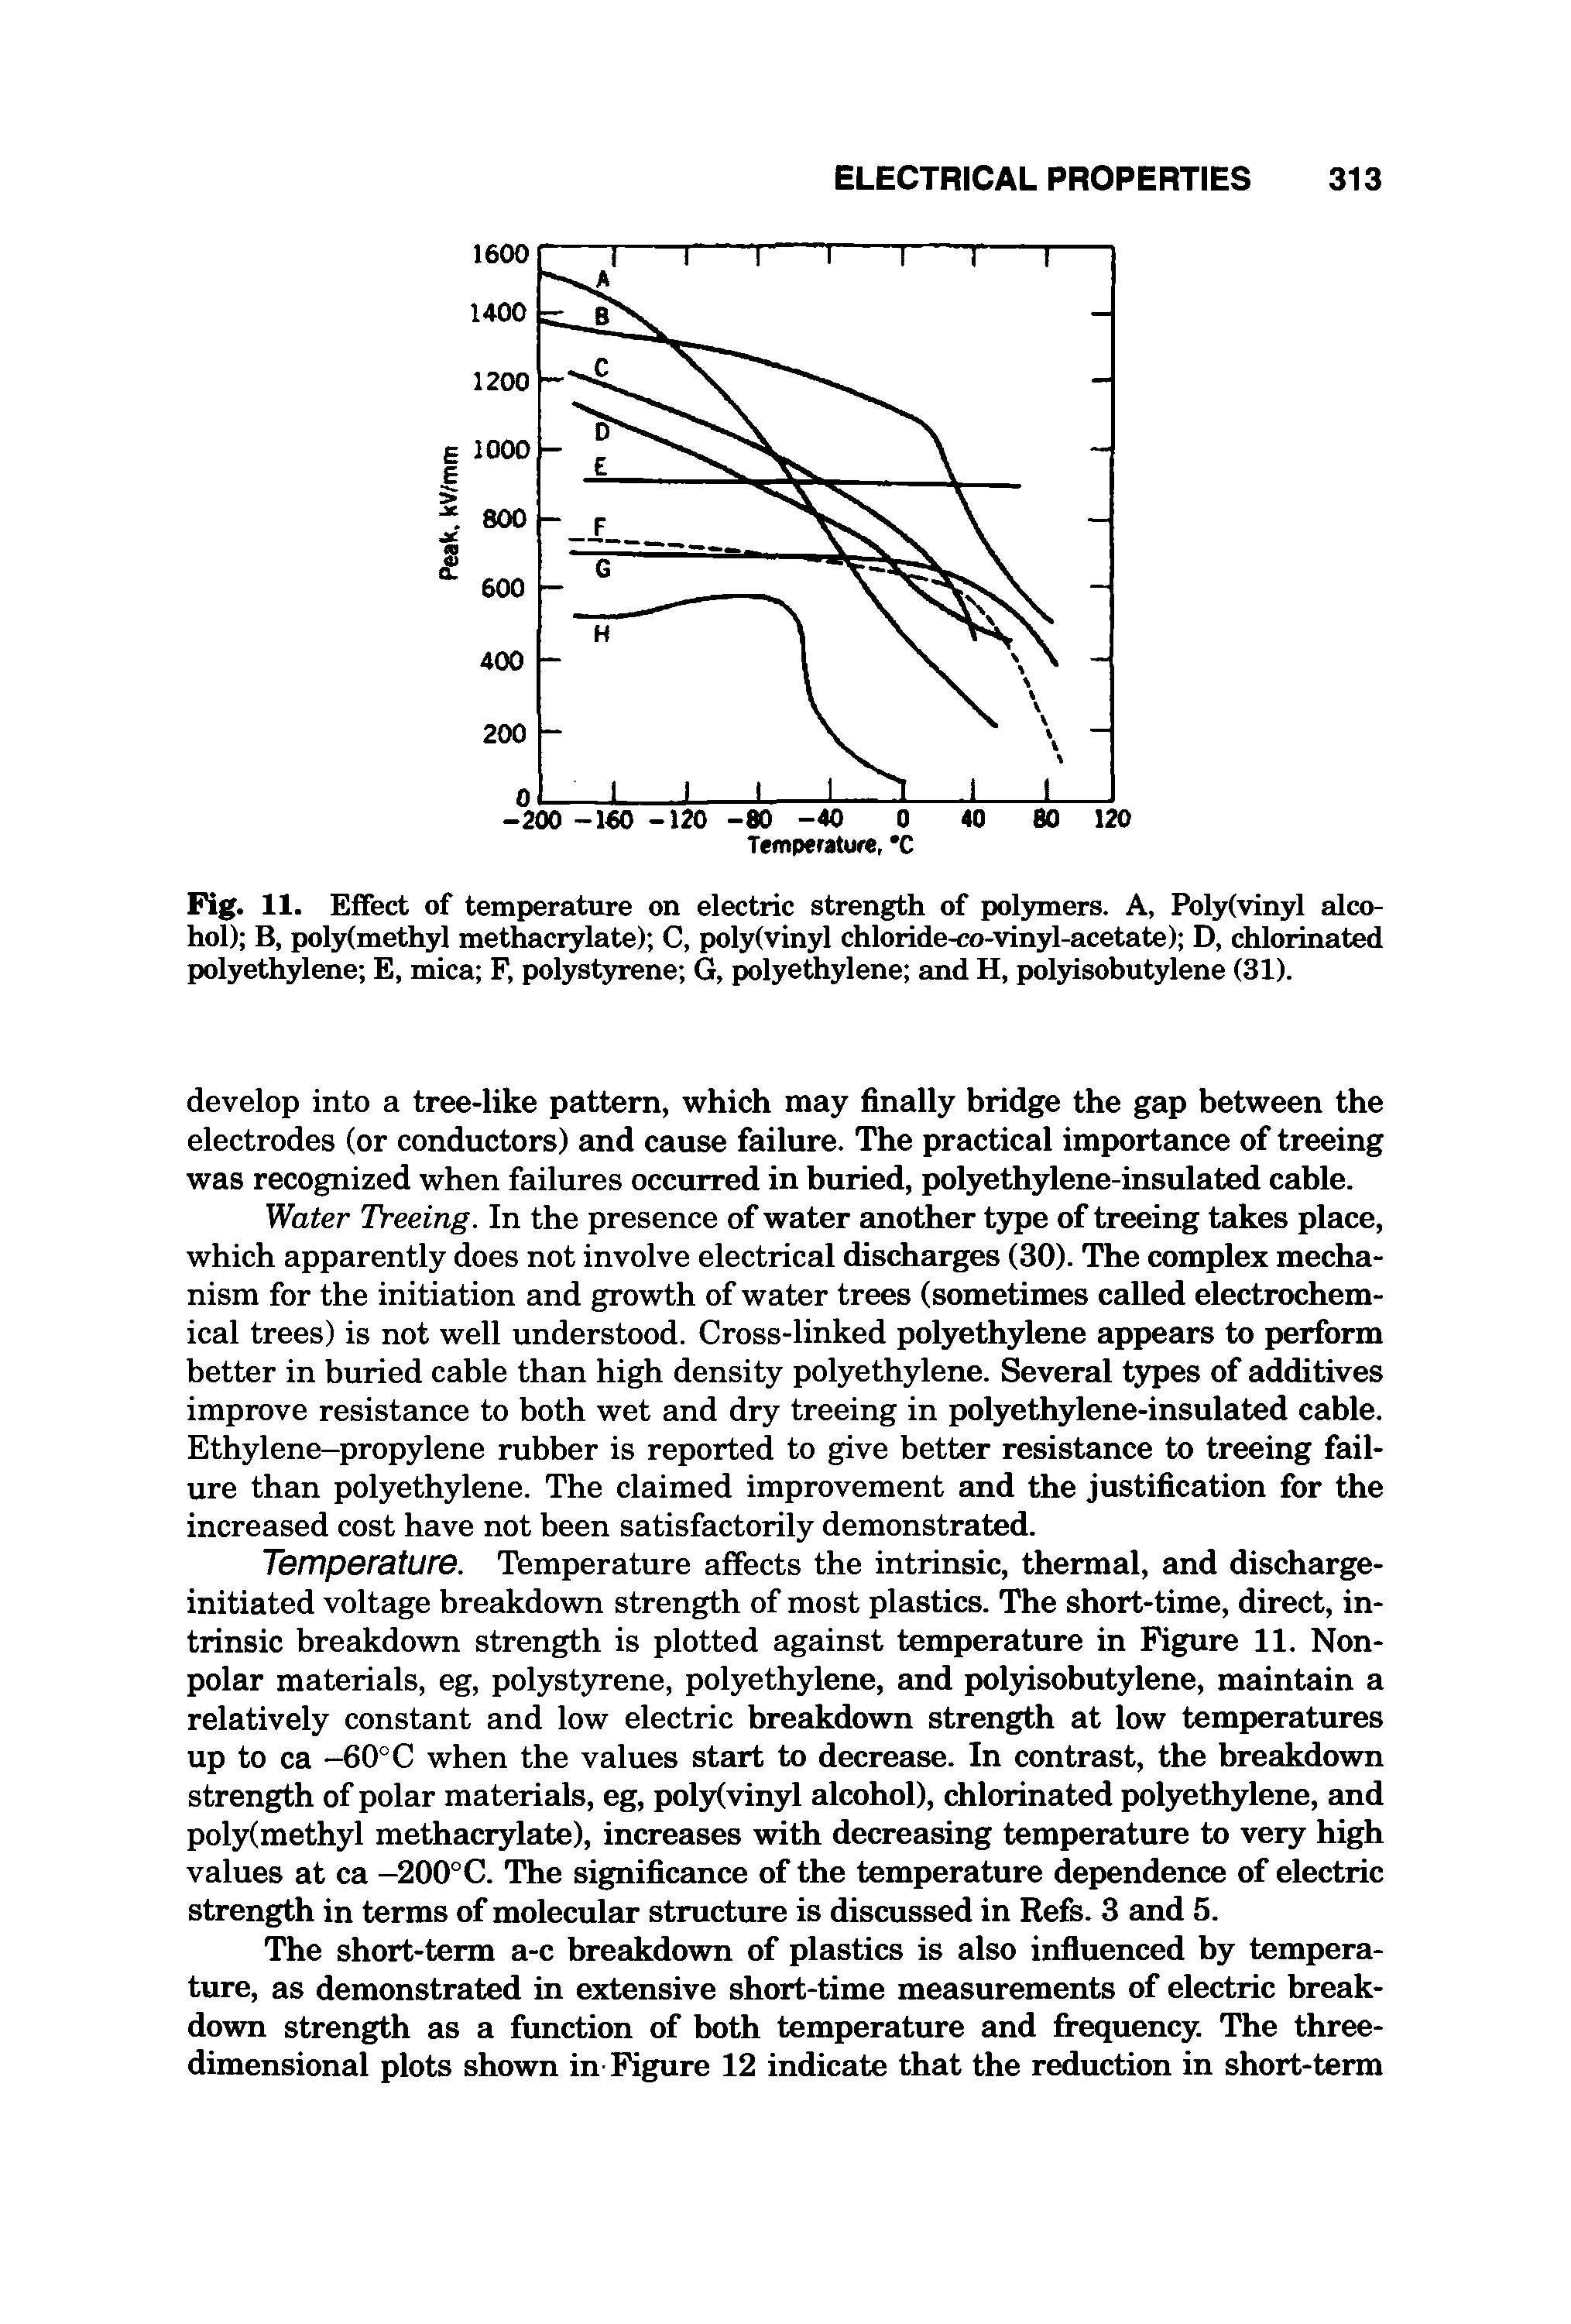 Fig. 11. Effect of temperature on electric strength of polymers. A, Polyfvinyl alcohol) B, polyfmethyl methacrylate) C, polyfvinyl chloride-co-vinyl-acetate) D, chlorinated polyethylene E, mica F, polystyrene G, polyethylene and H, polyisobutylene (31).